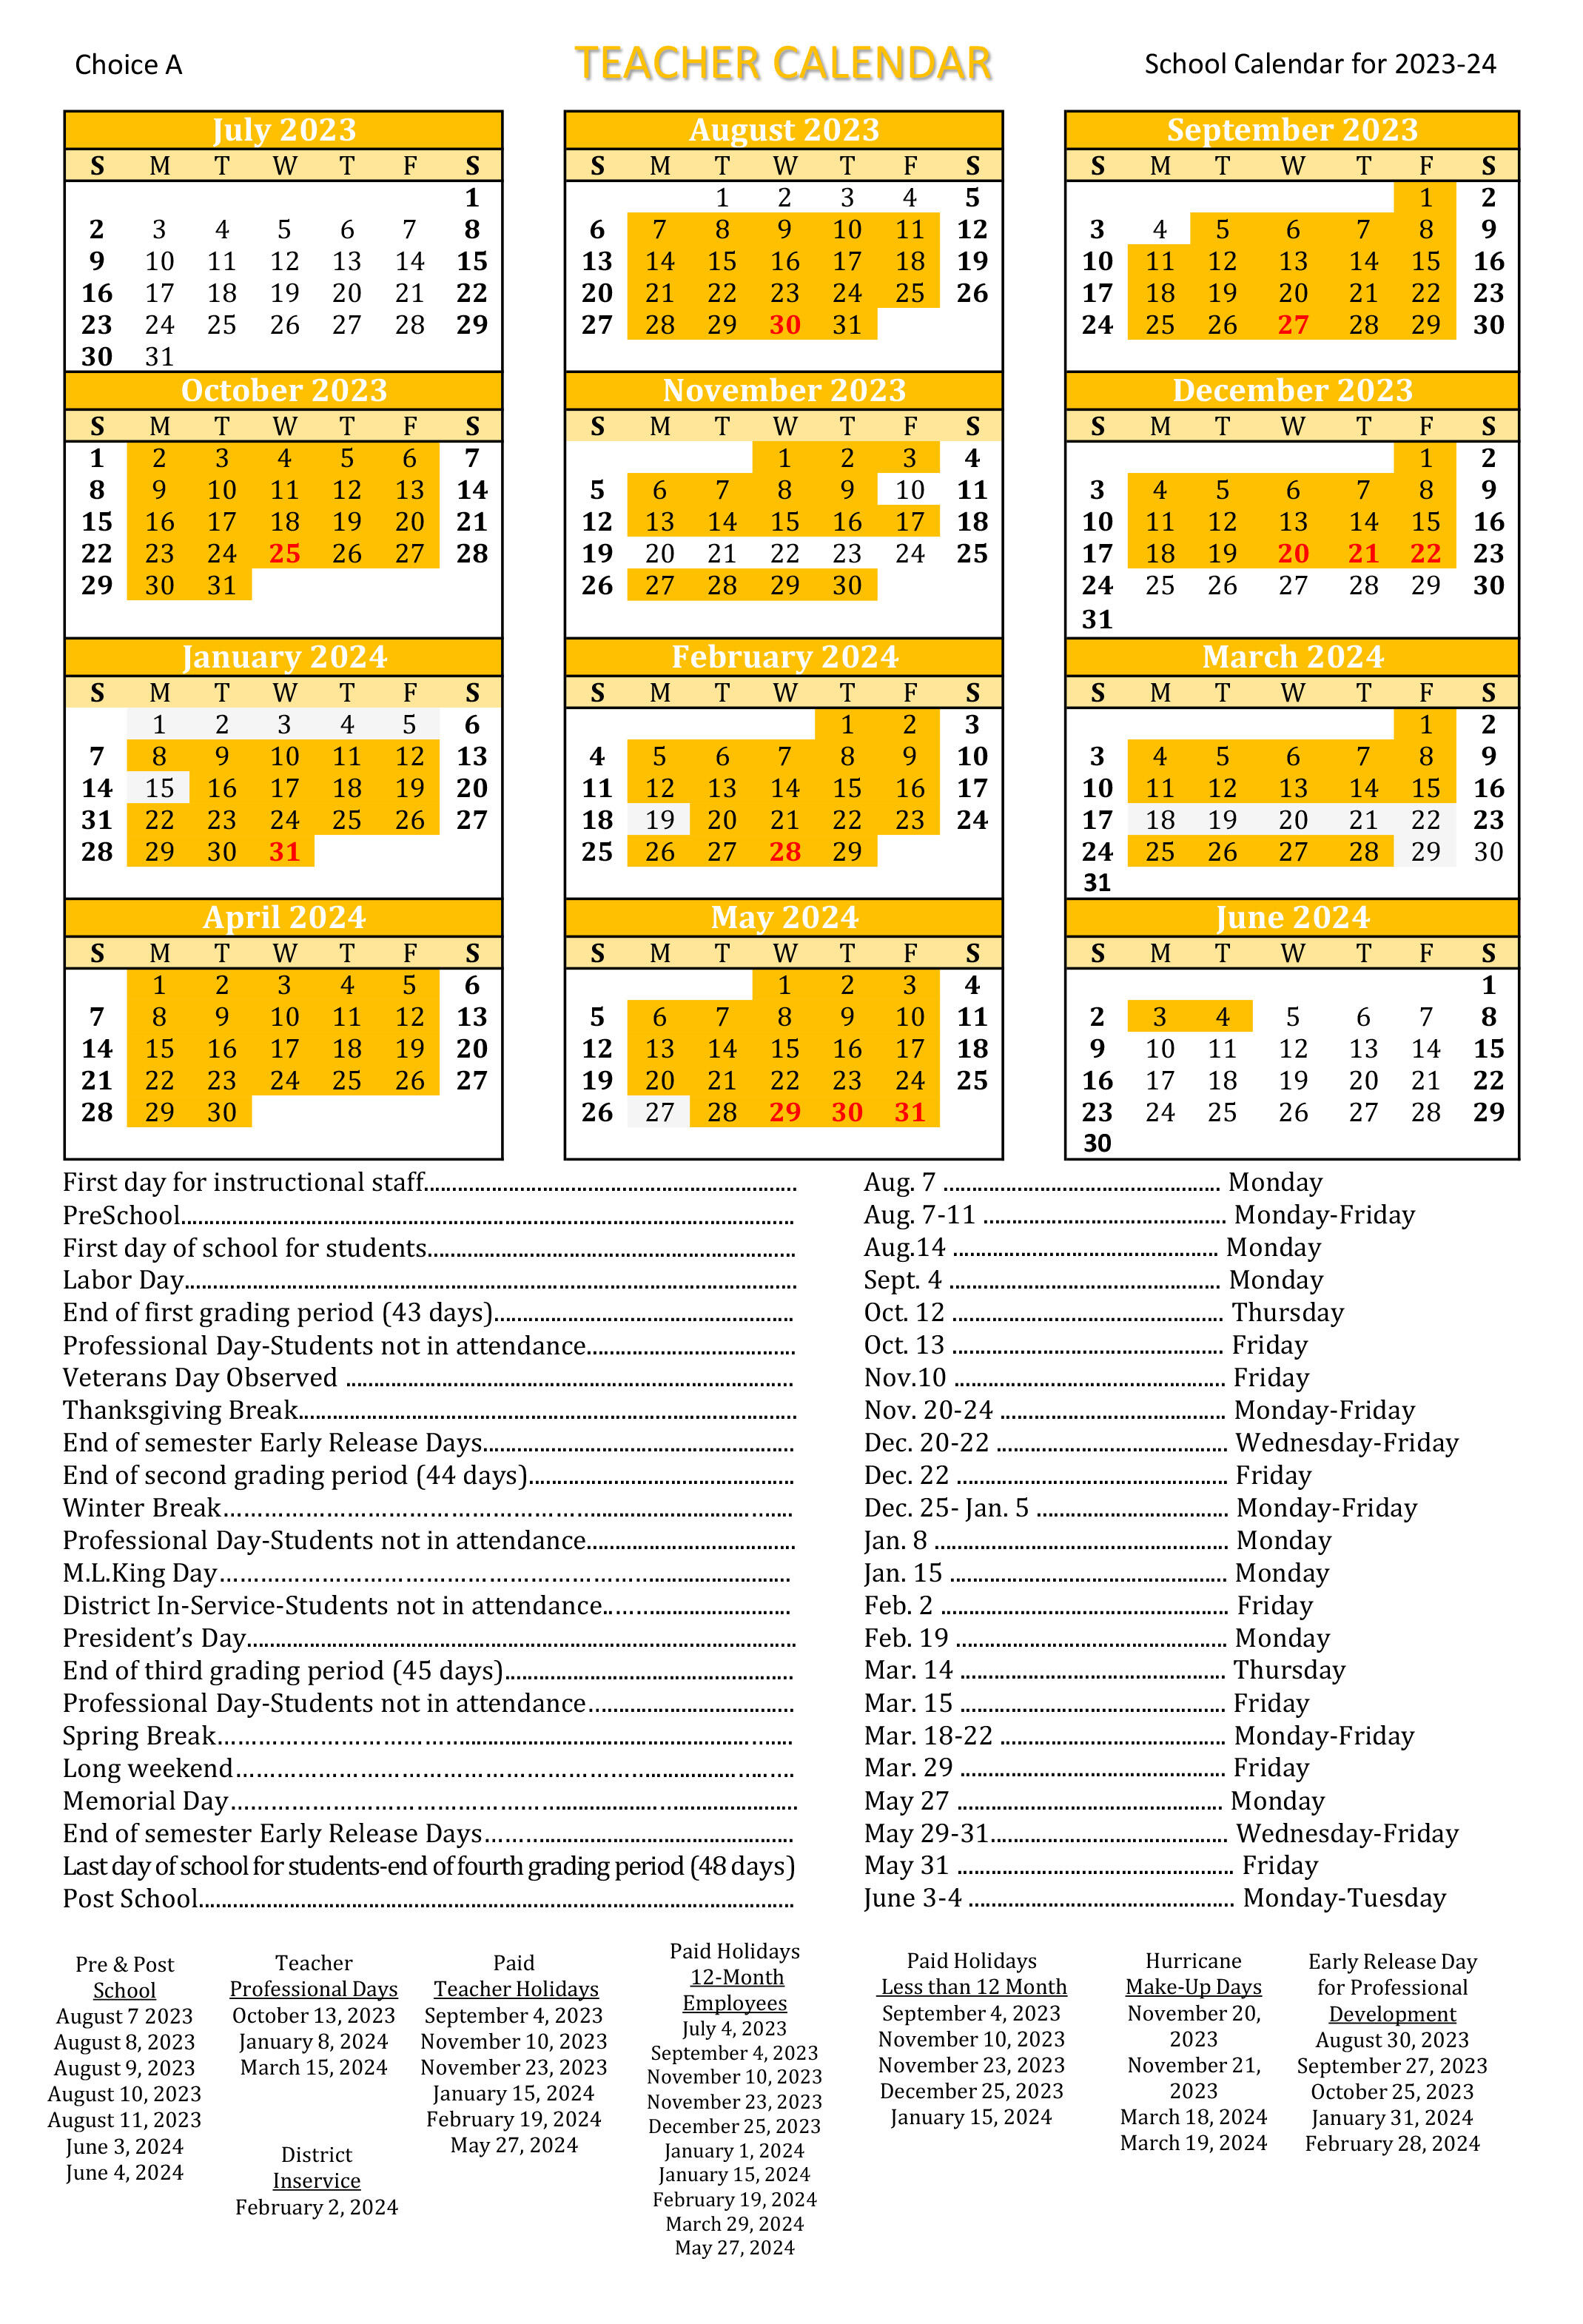 2023-24 Calendar - Option A